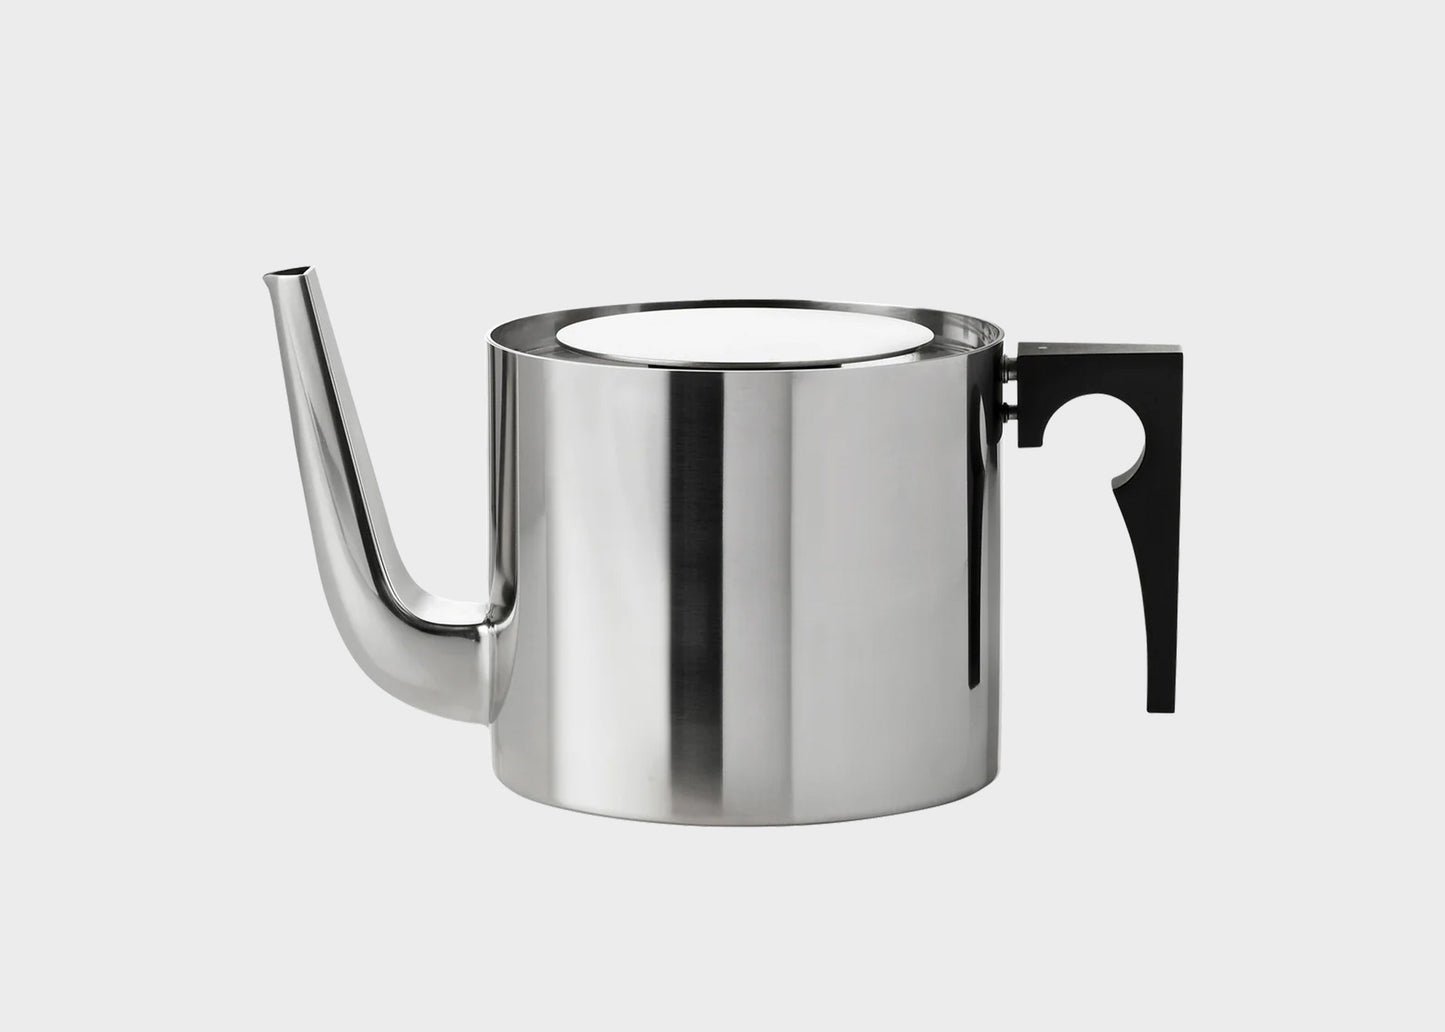 Arne Jacobsen Tea Pot by Stelton